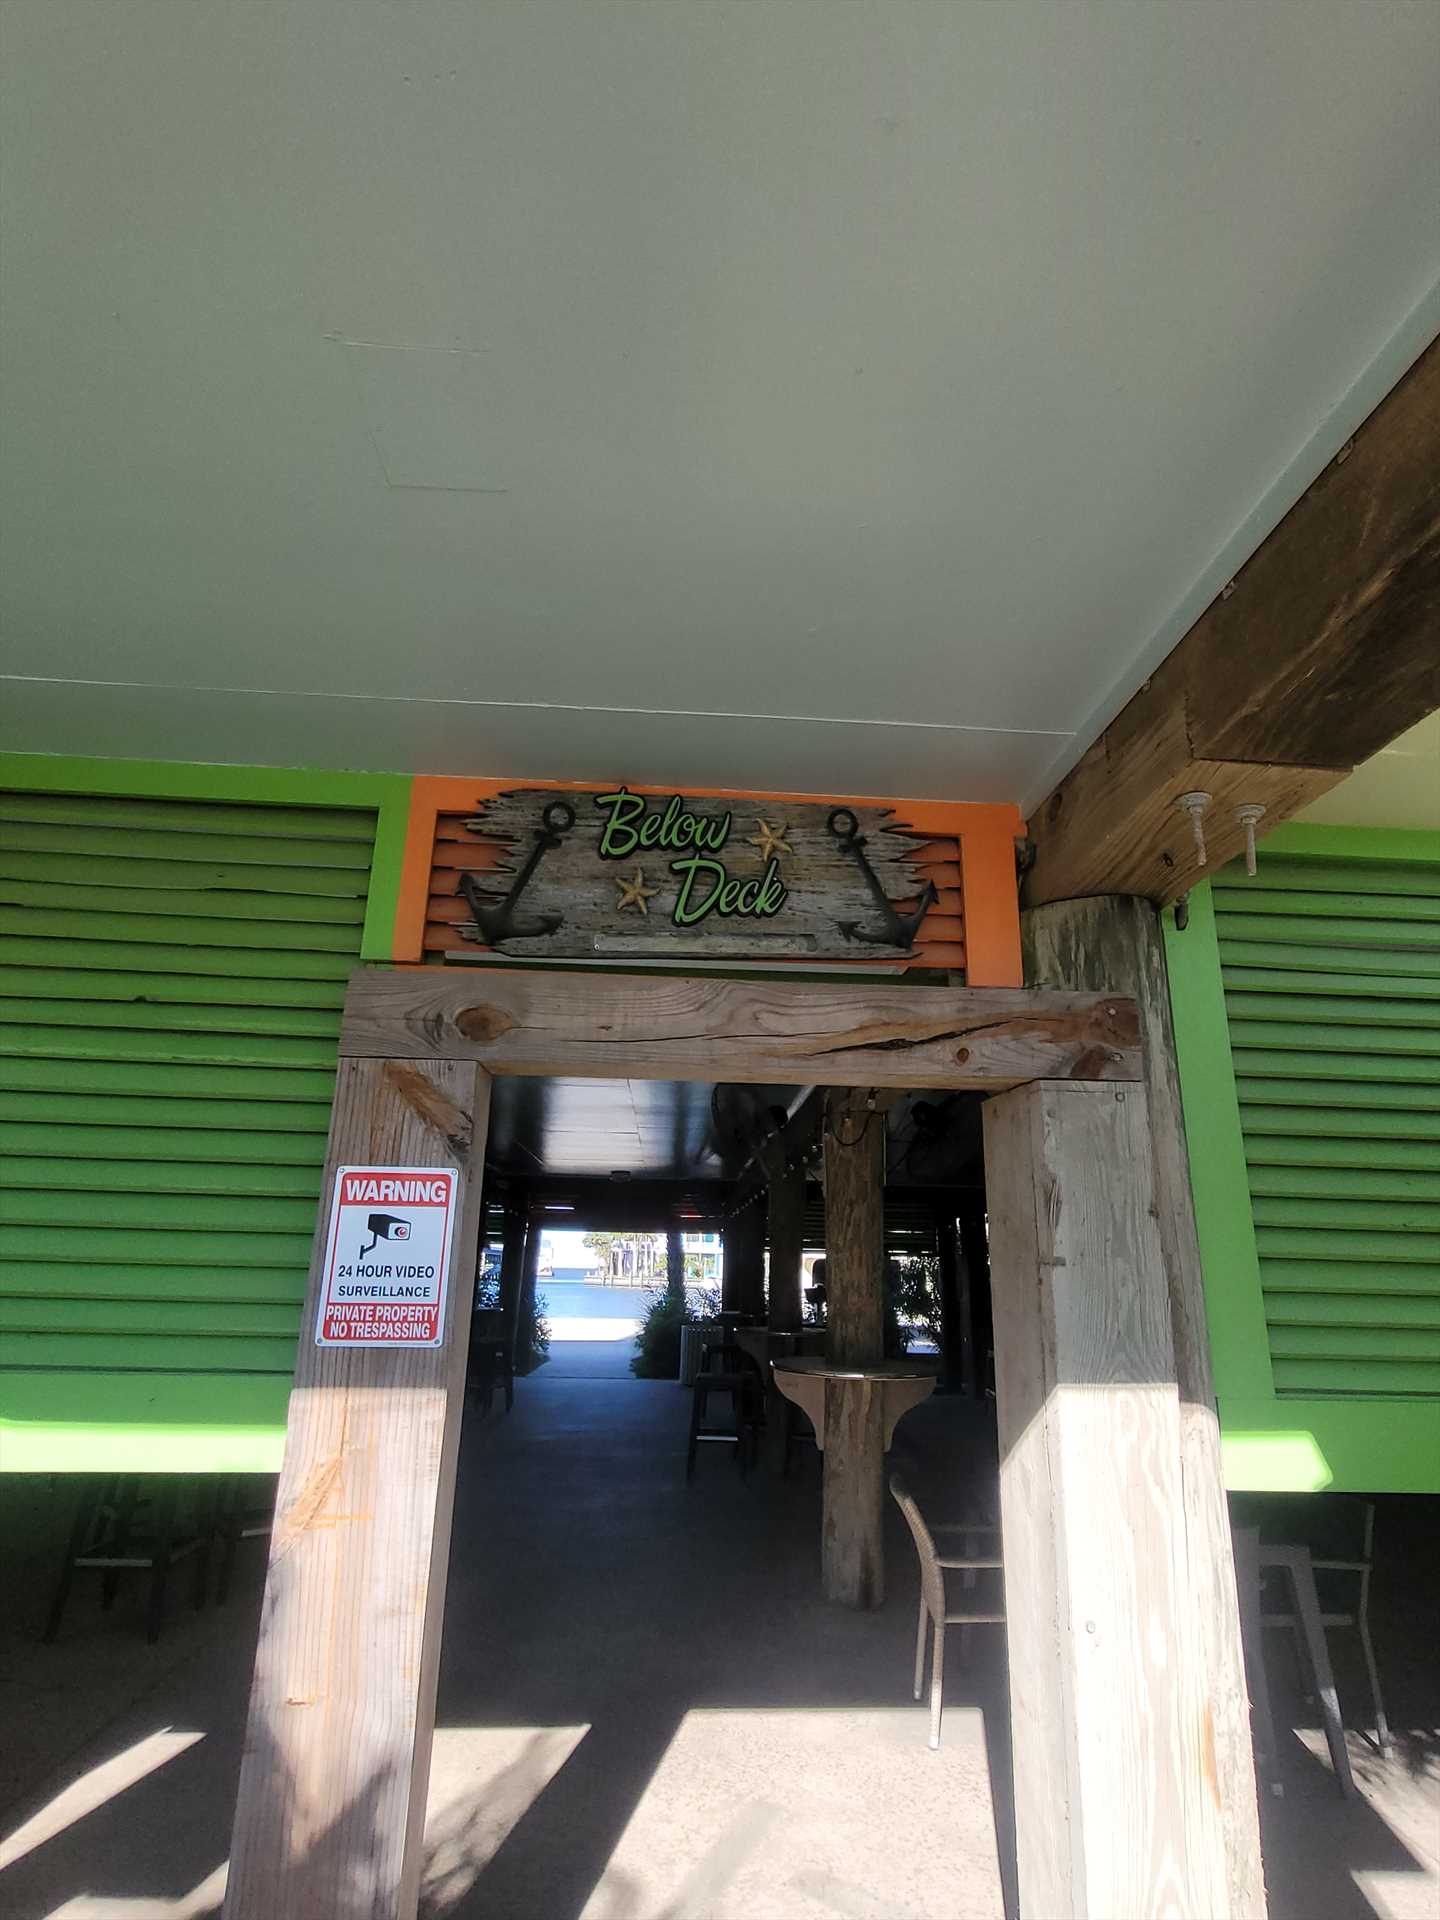 Below deck bar entrance from street